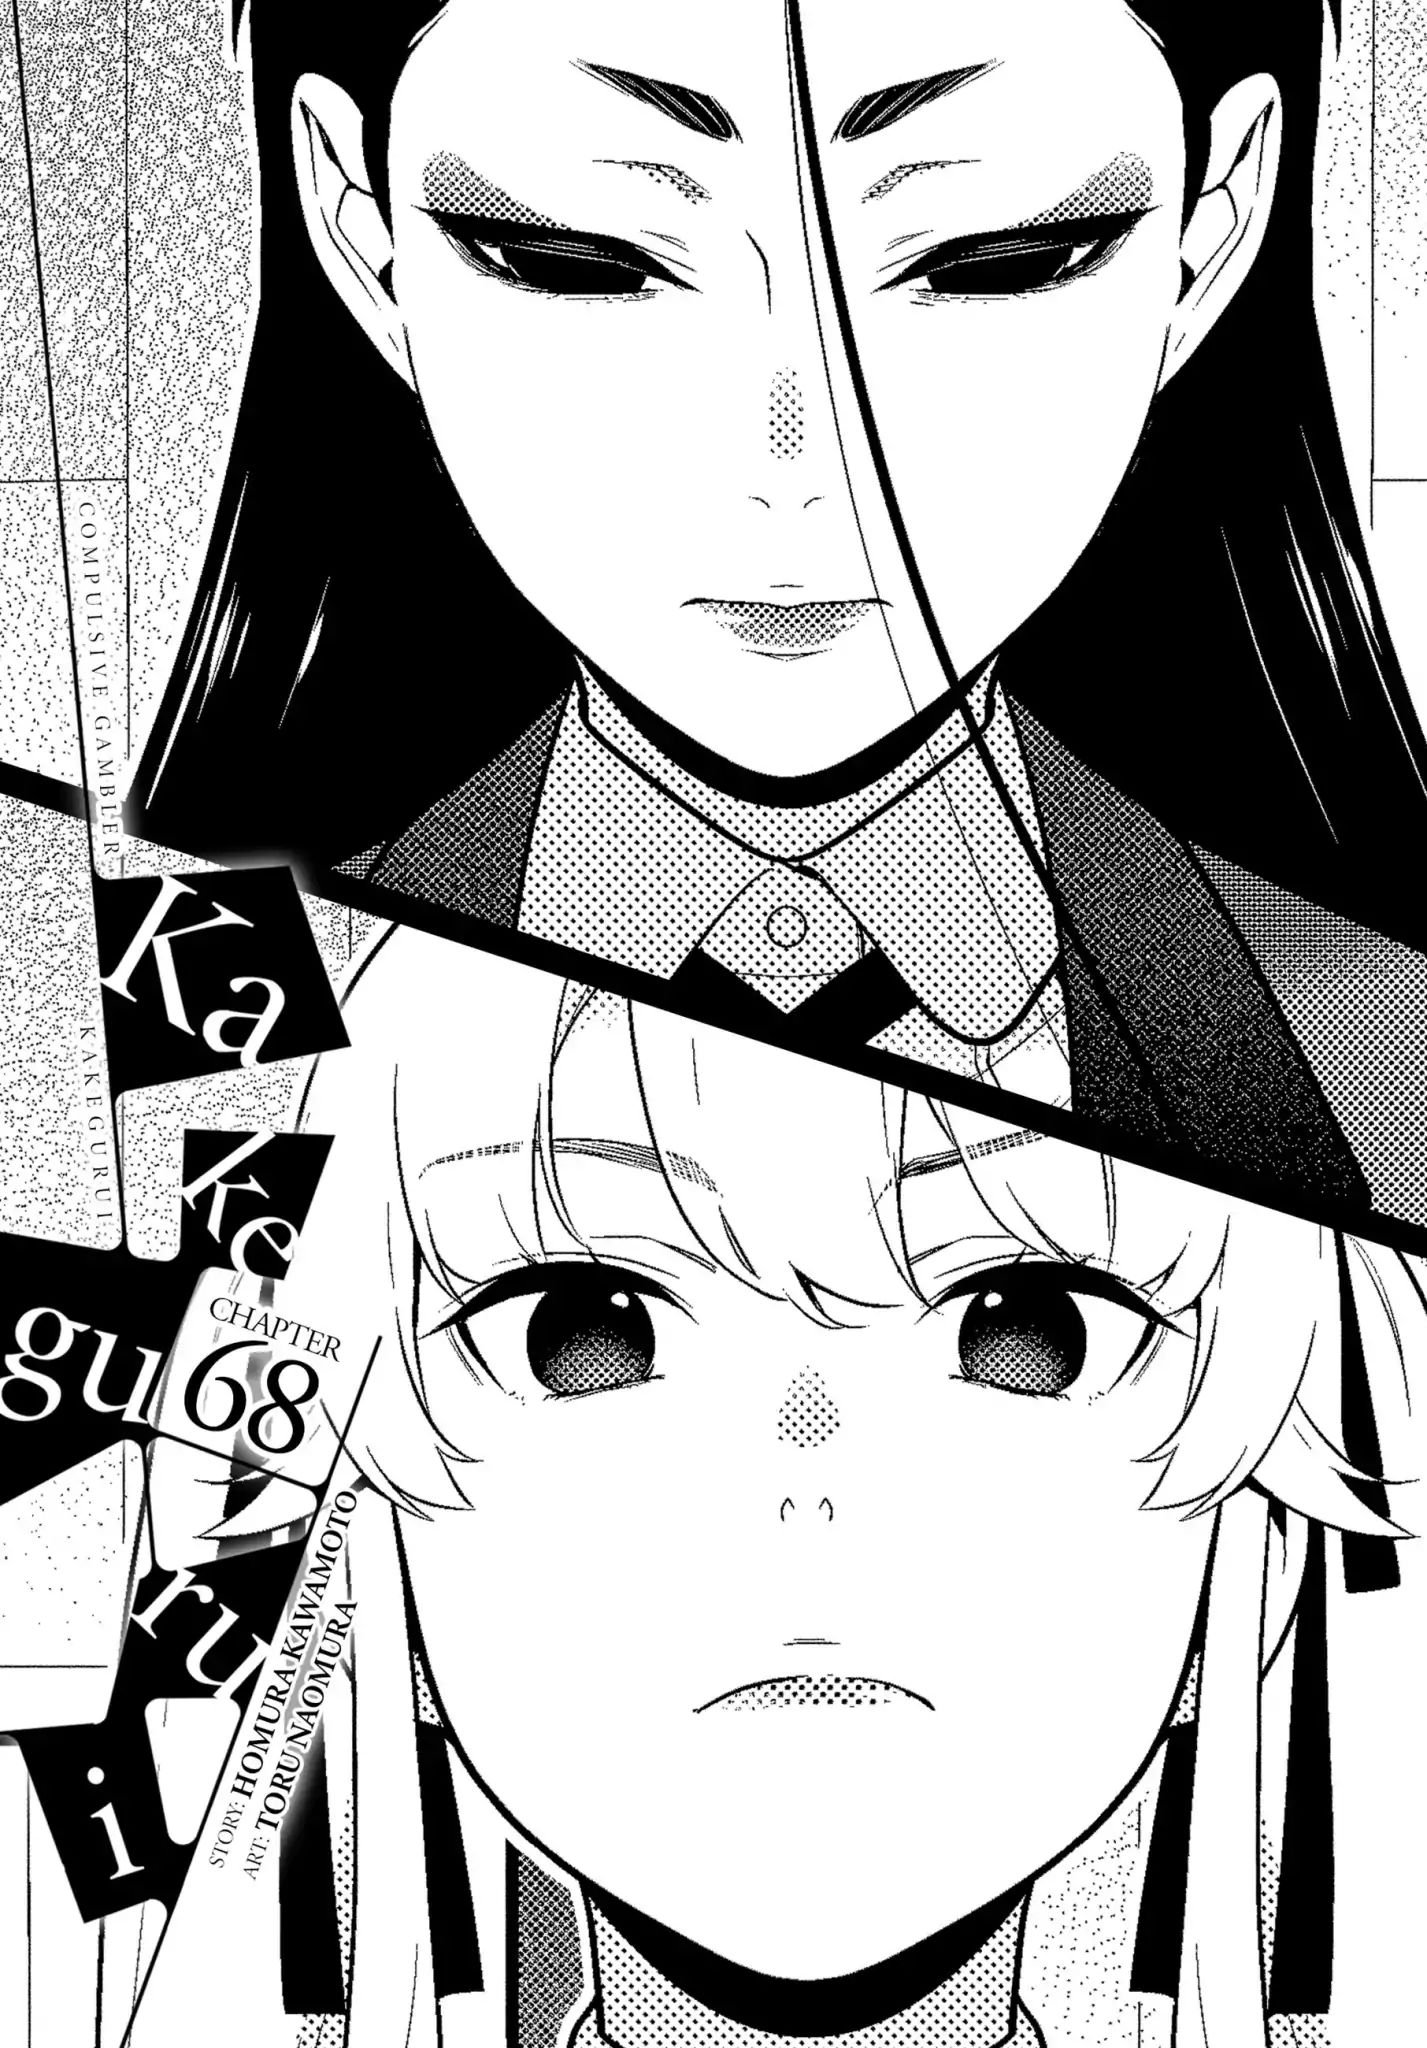 Manga Panels posted by a Doomer - Kakegurui by Tōru Naomura